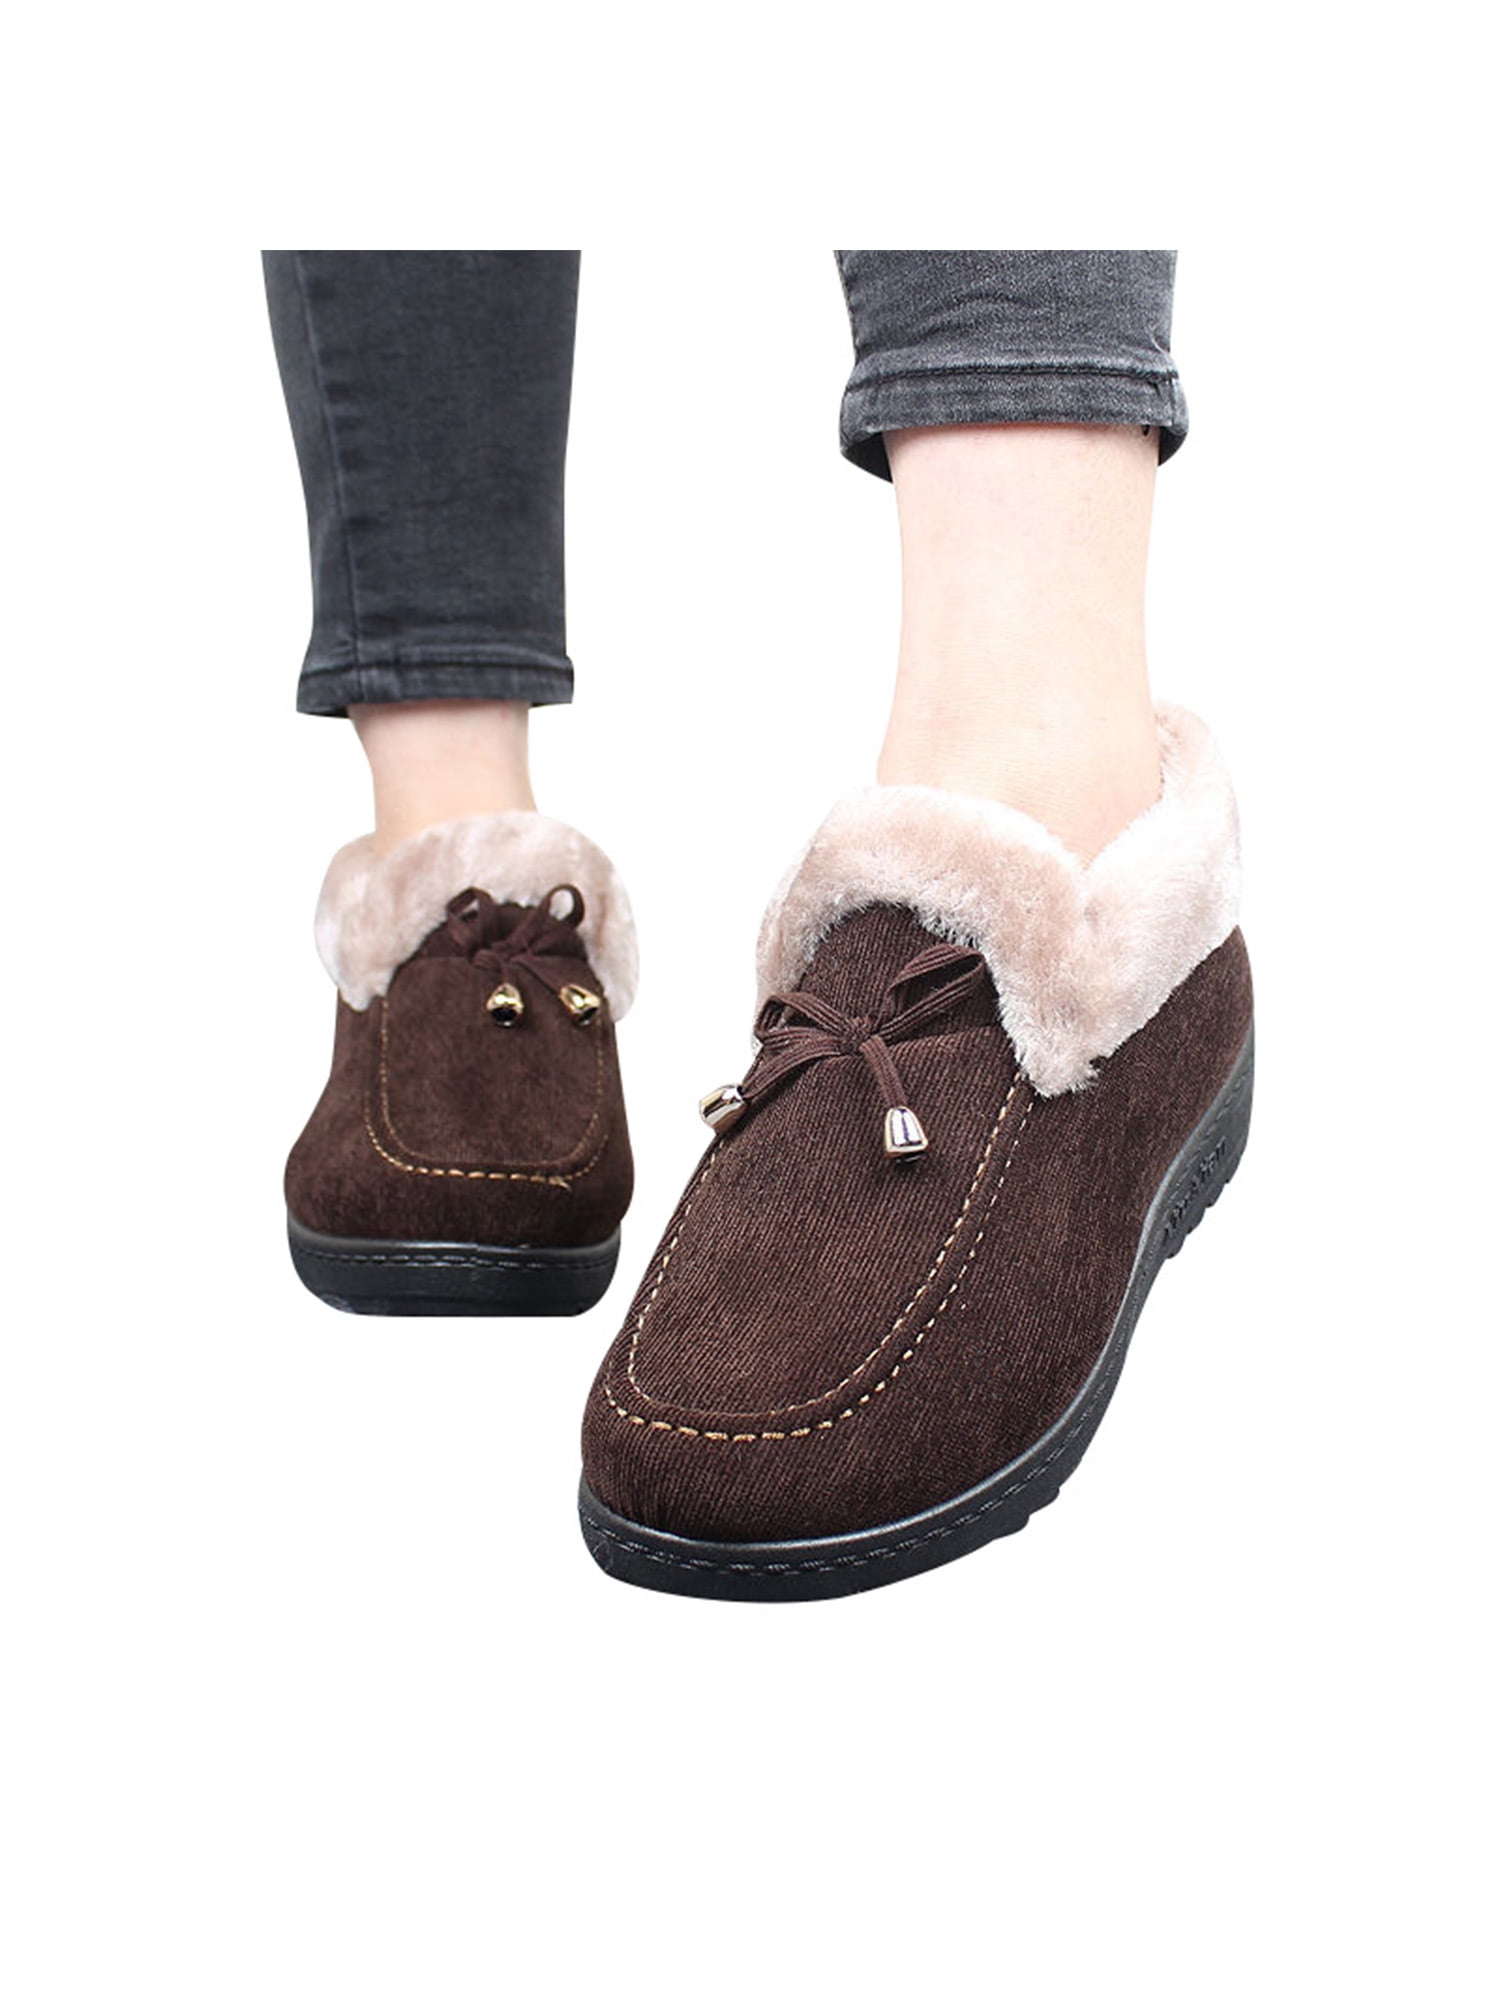 Details about   Vintage Handmade Tan Brown Leather Slip On Moccasin Loafer Slipper Shoe Women 9 